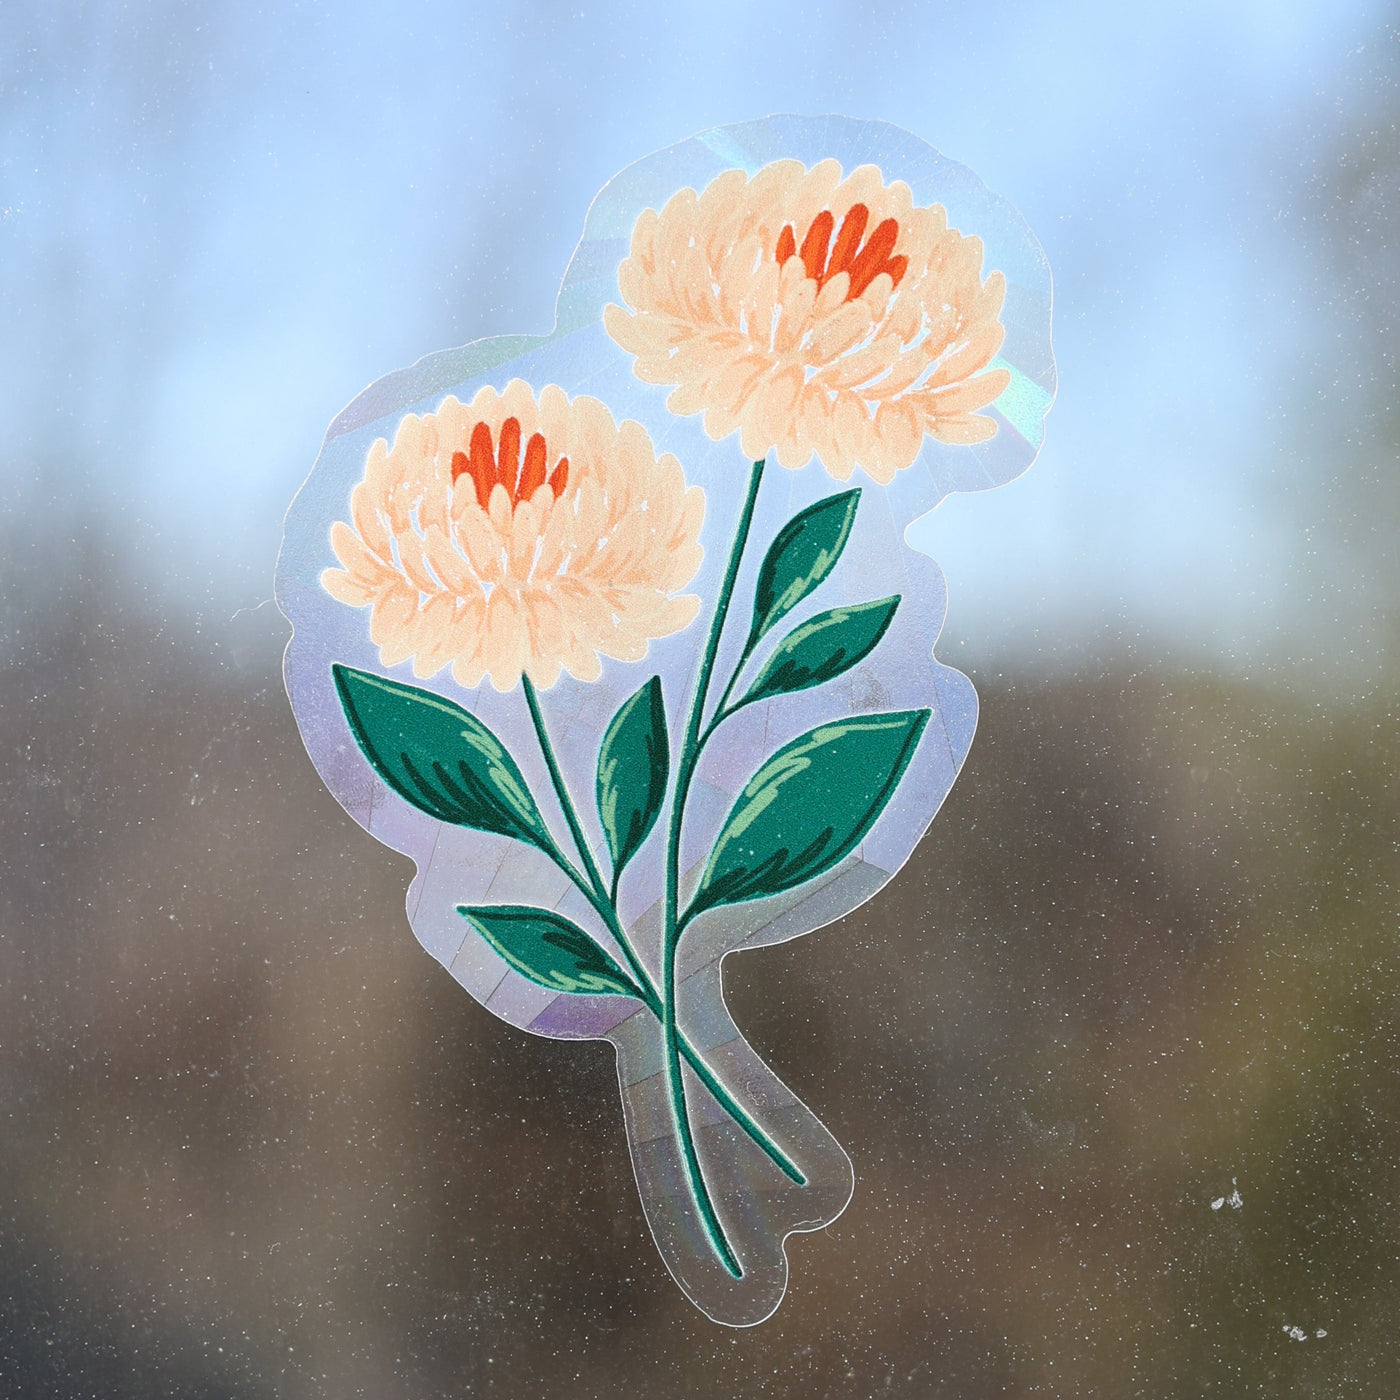 Elyse Breanne Design Floral Book Sun Catcher Sticker